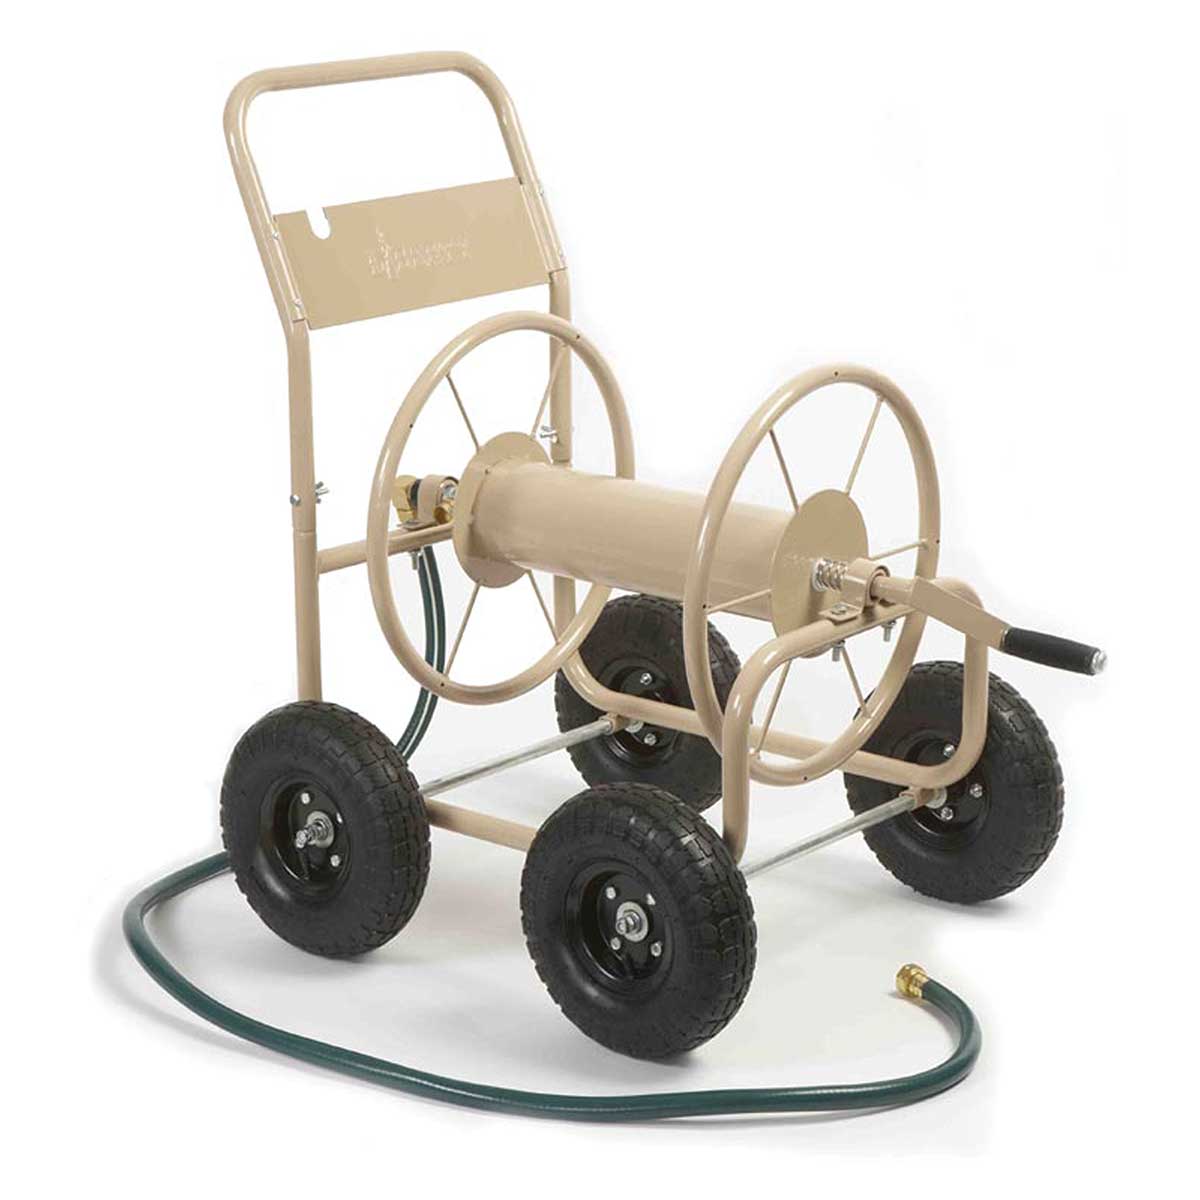 Reviews for Yard Butler 2 Wheeled Hose Reel Cart